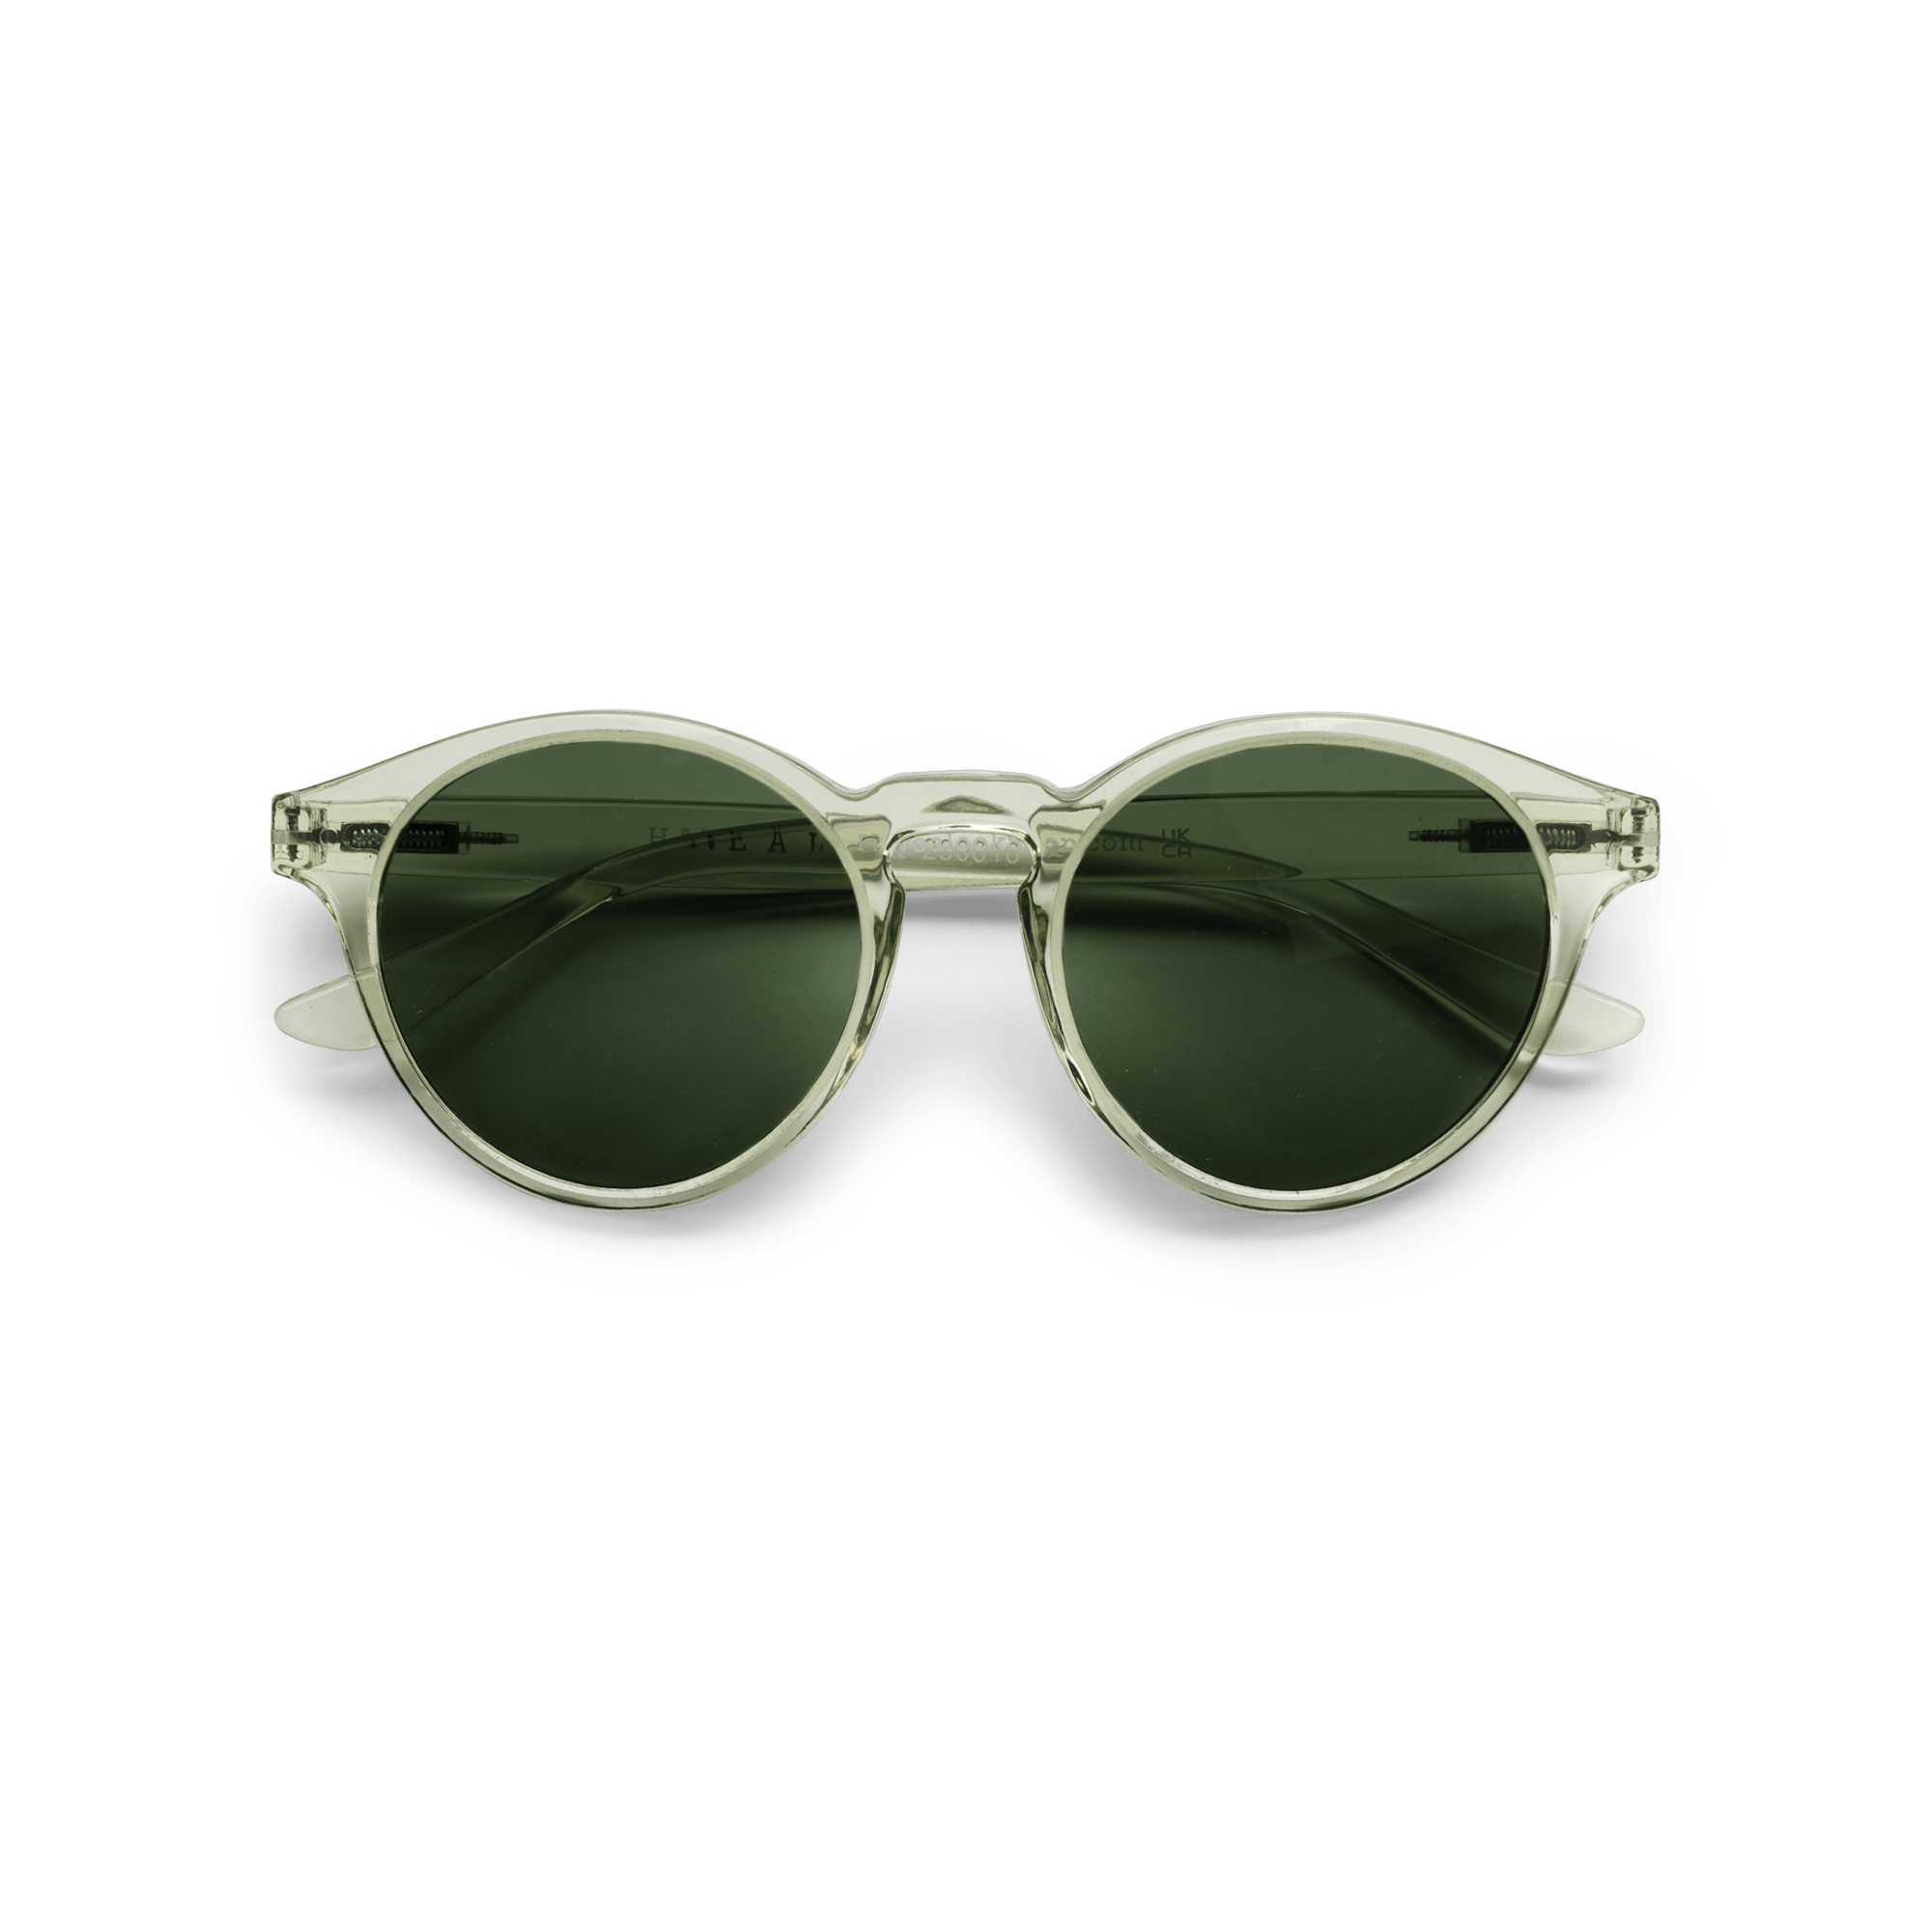 Sonnenbrillen Casual - clear jade aus Have A Look